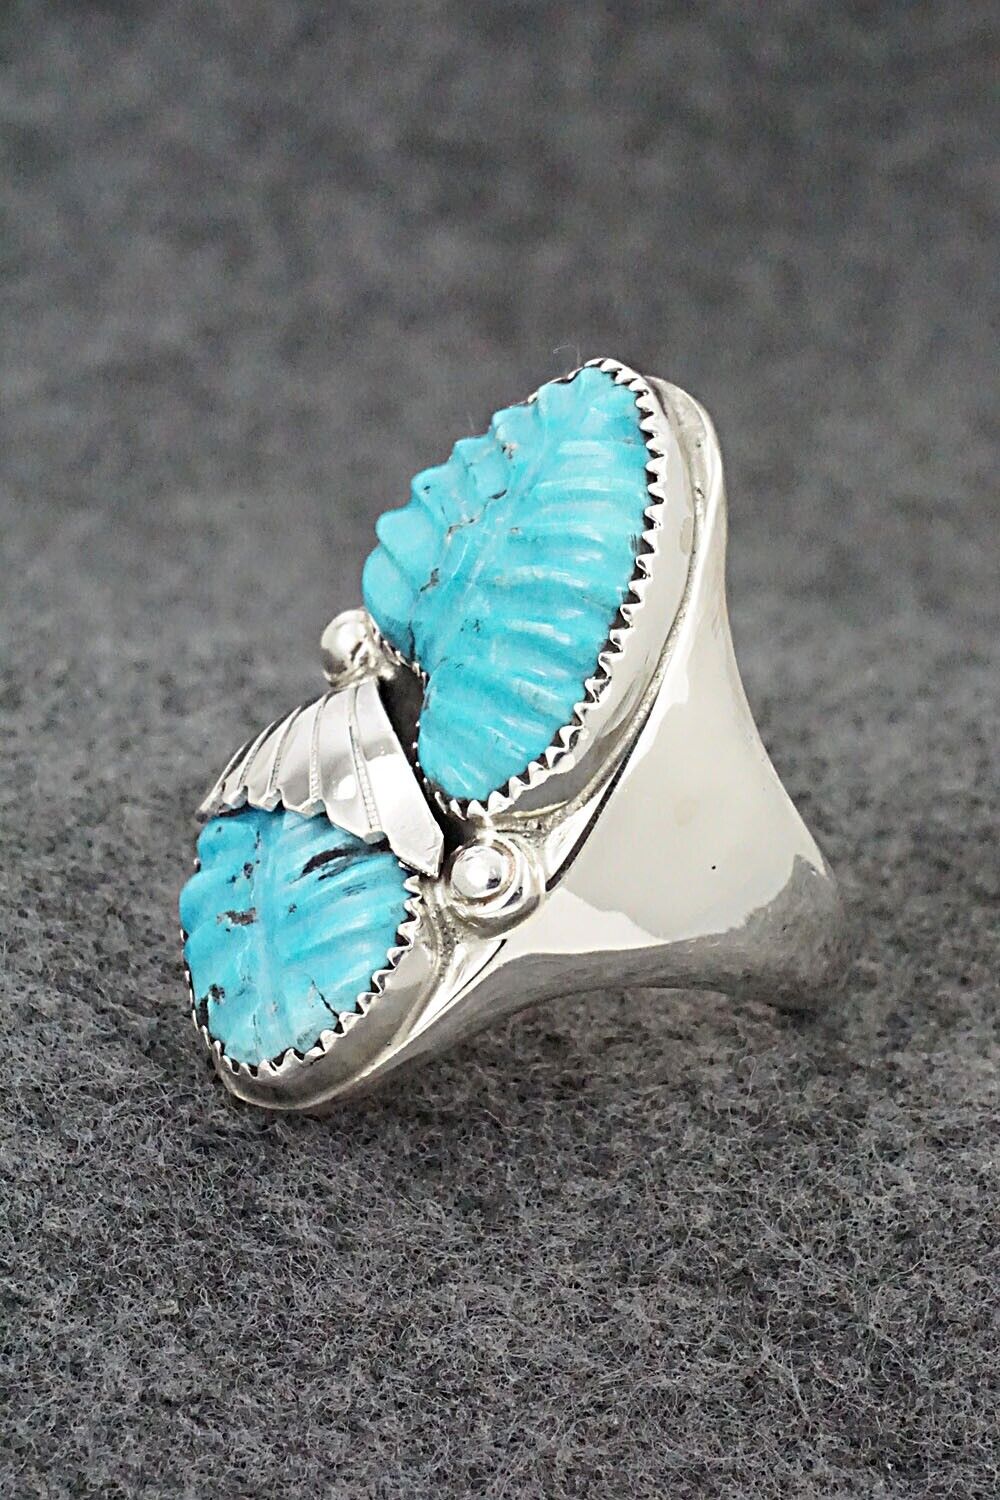 Turquoise & Sterling Silver Ring - Lyolita Tsattie - Size 11.5